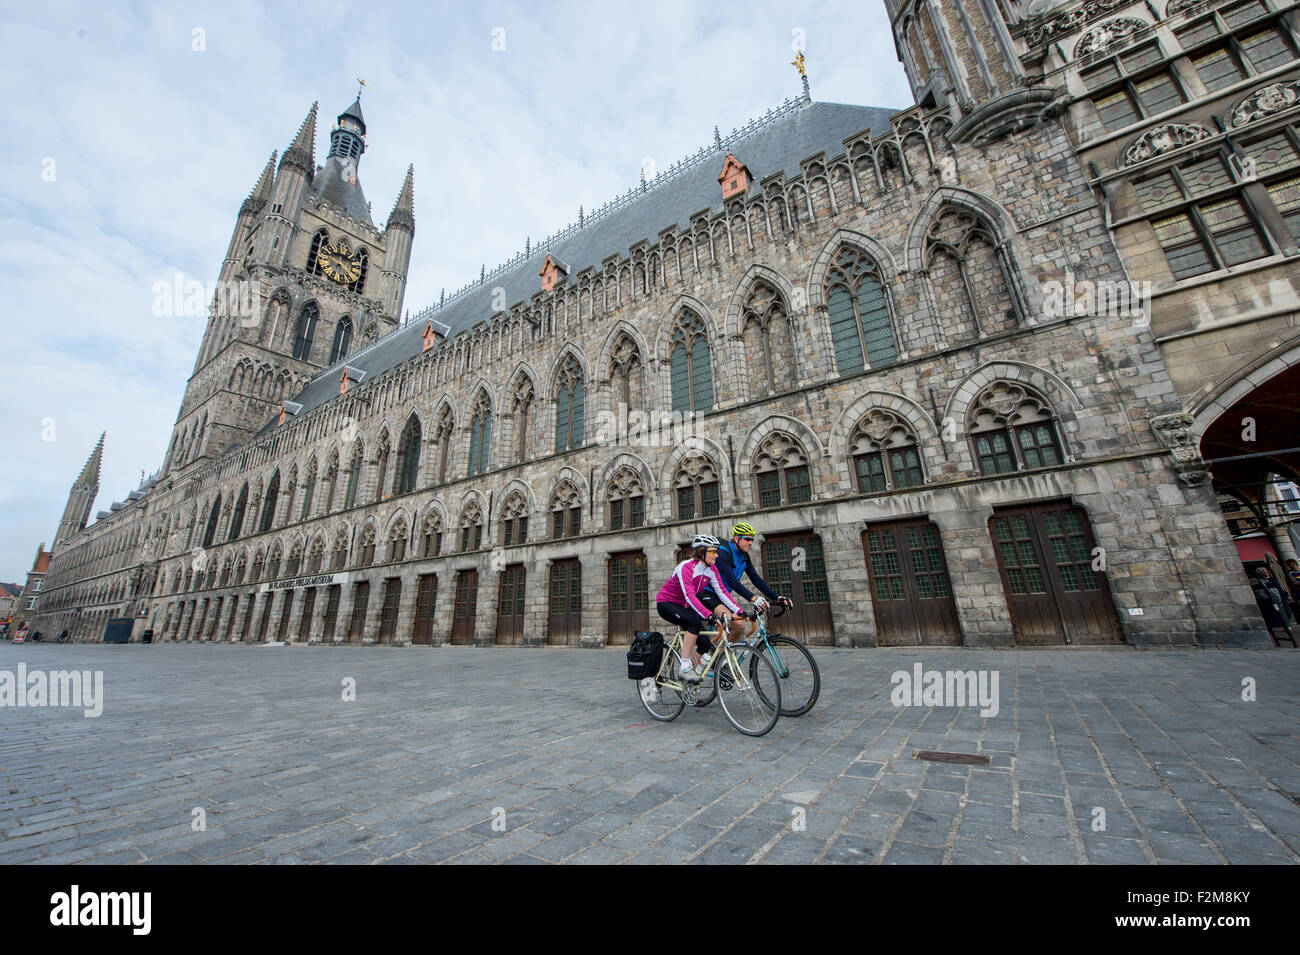 Main Square Ypres Ieper Flanders Belgium Stock Photo - Alamy